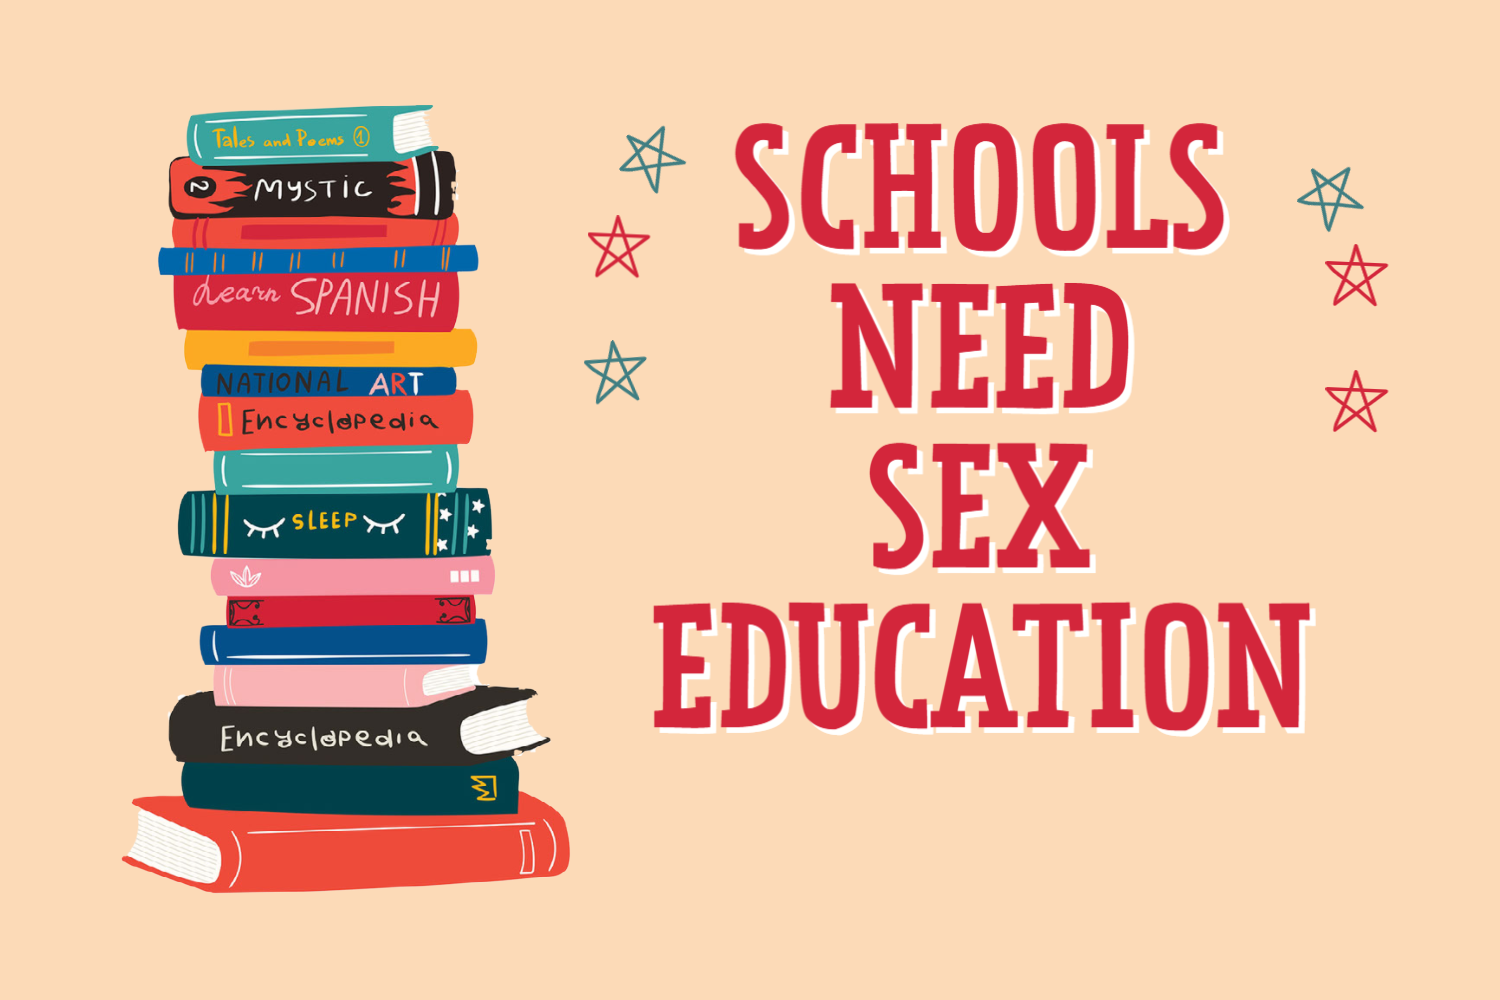 sex education should be mandatory in high schools essay